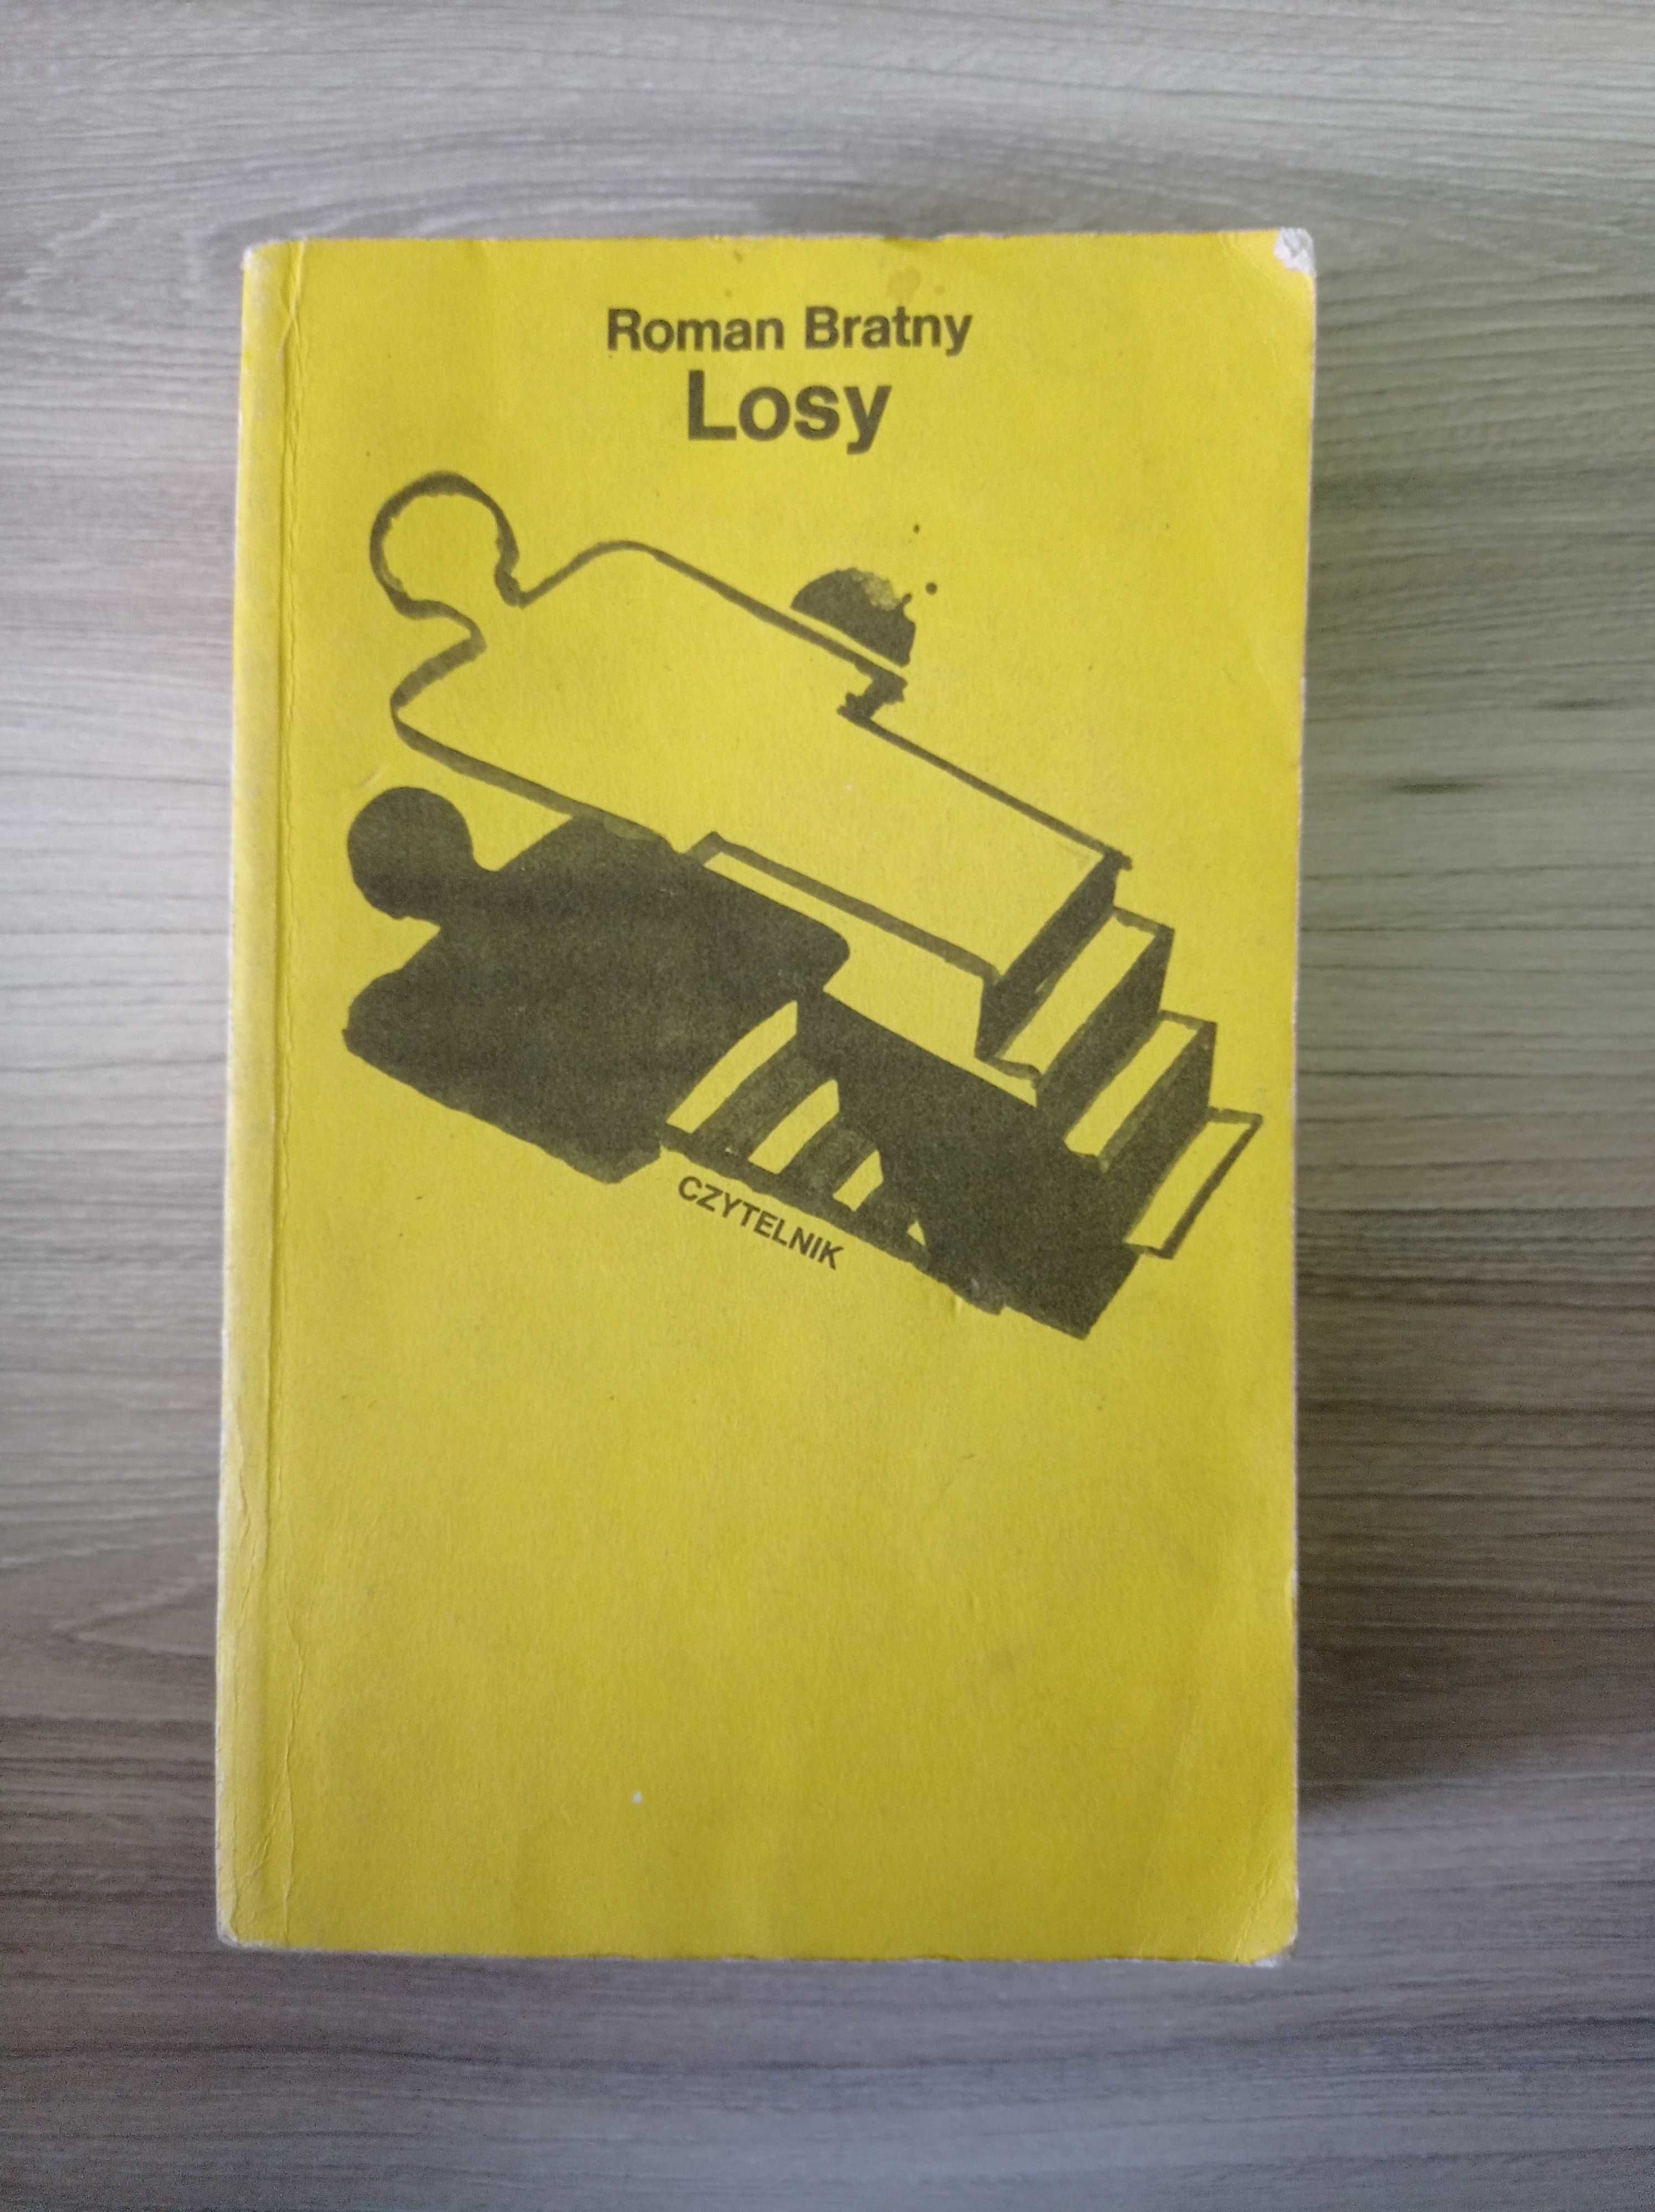 Losy, Roman Bratny